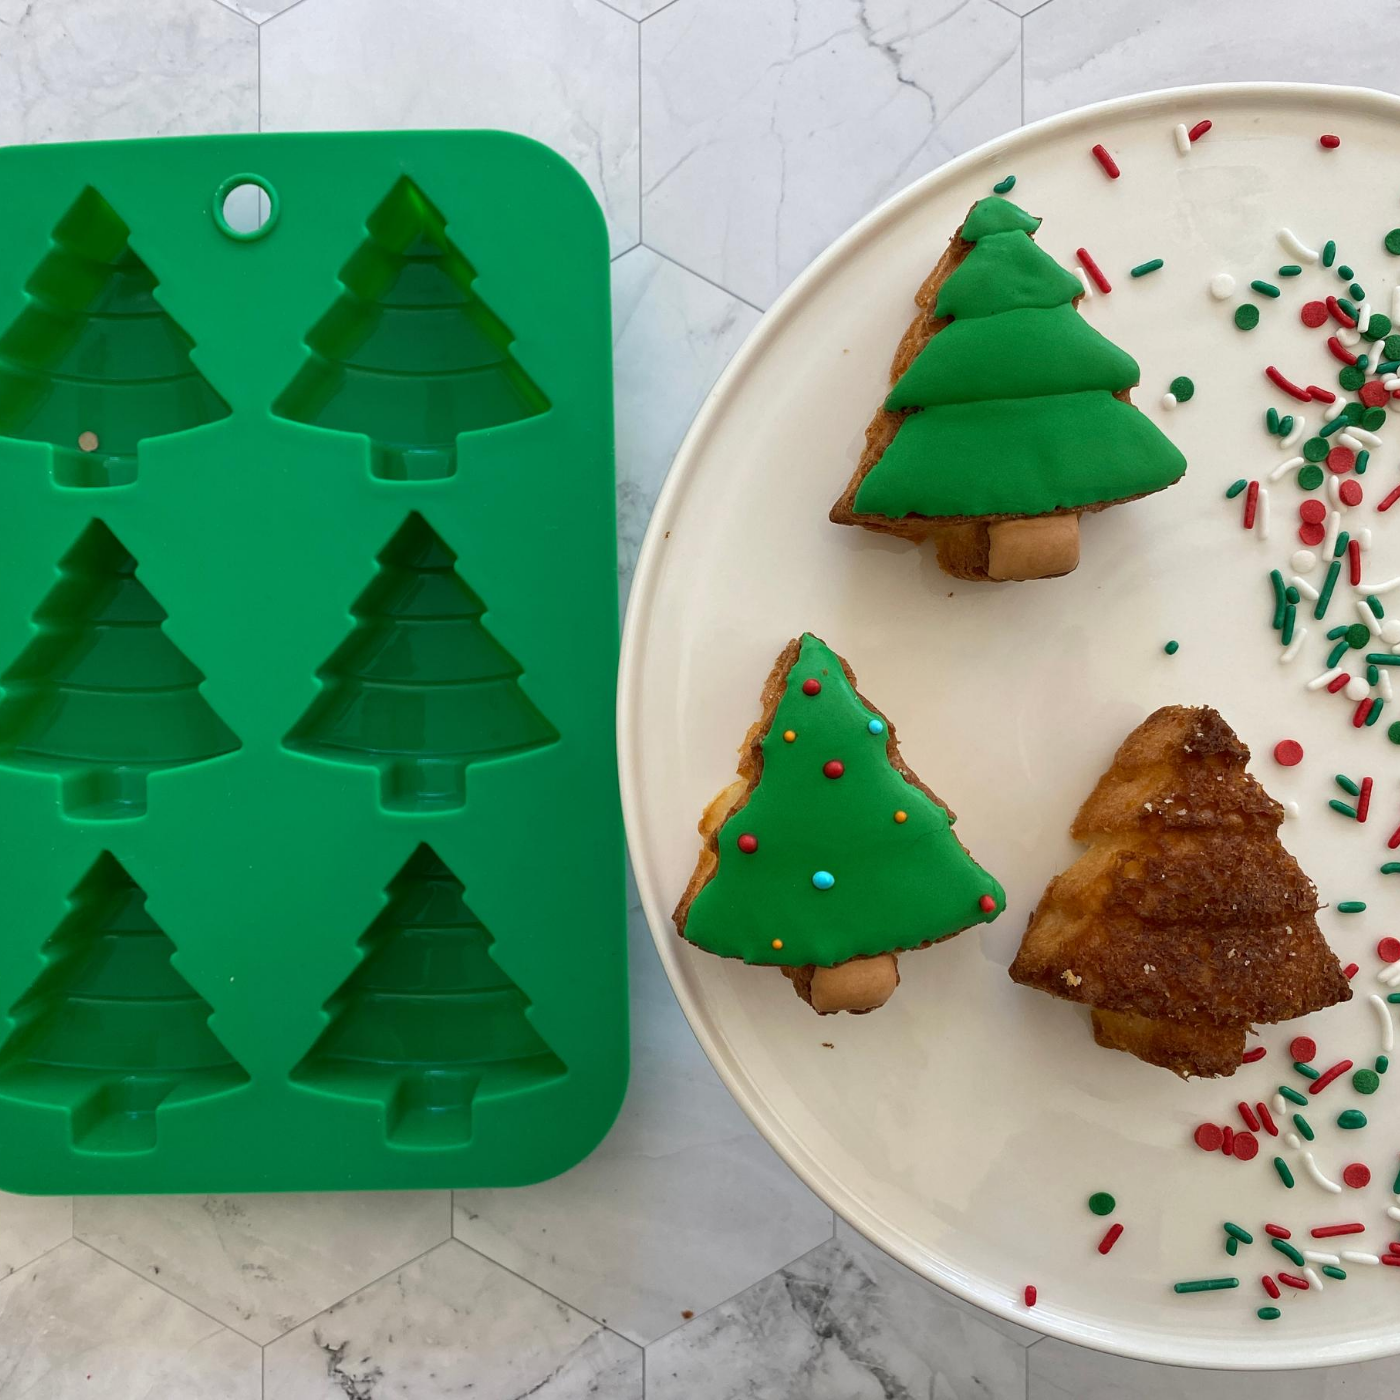 Christmas Tree Cake Silicone Molds Set